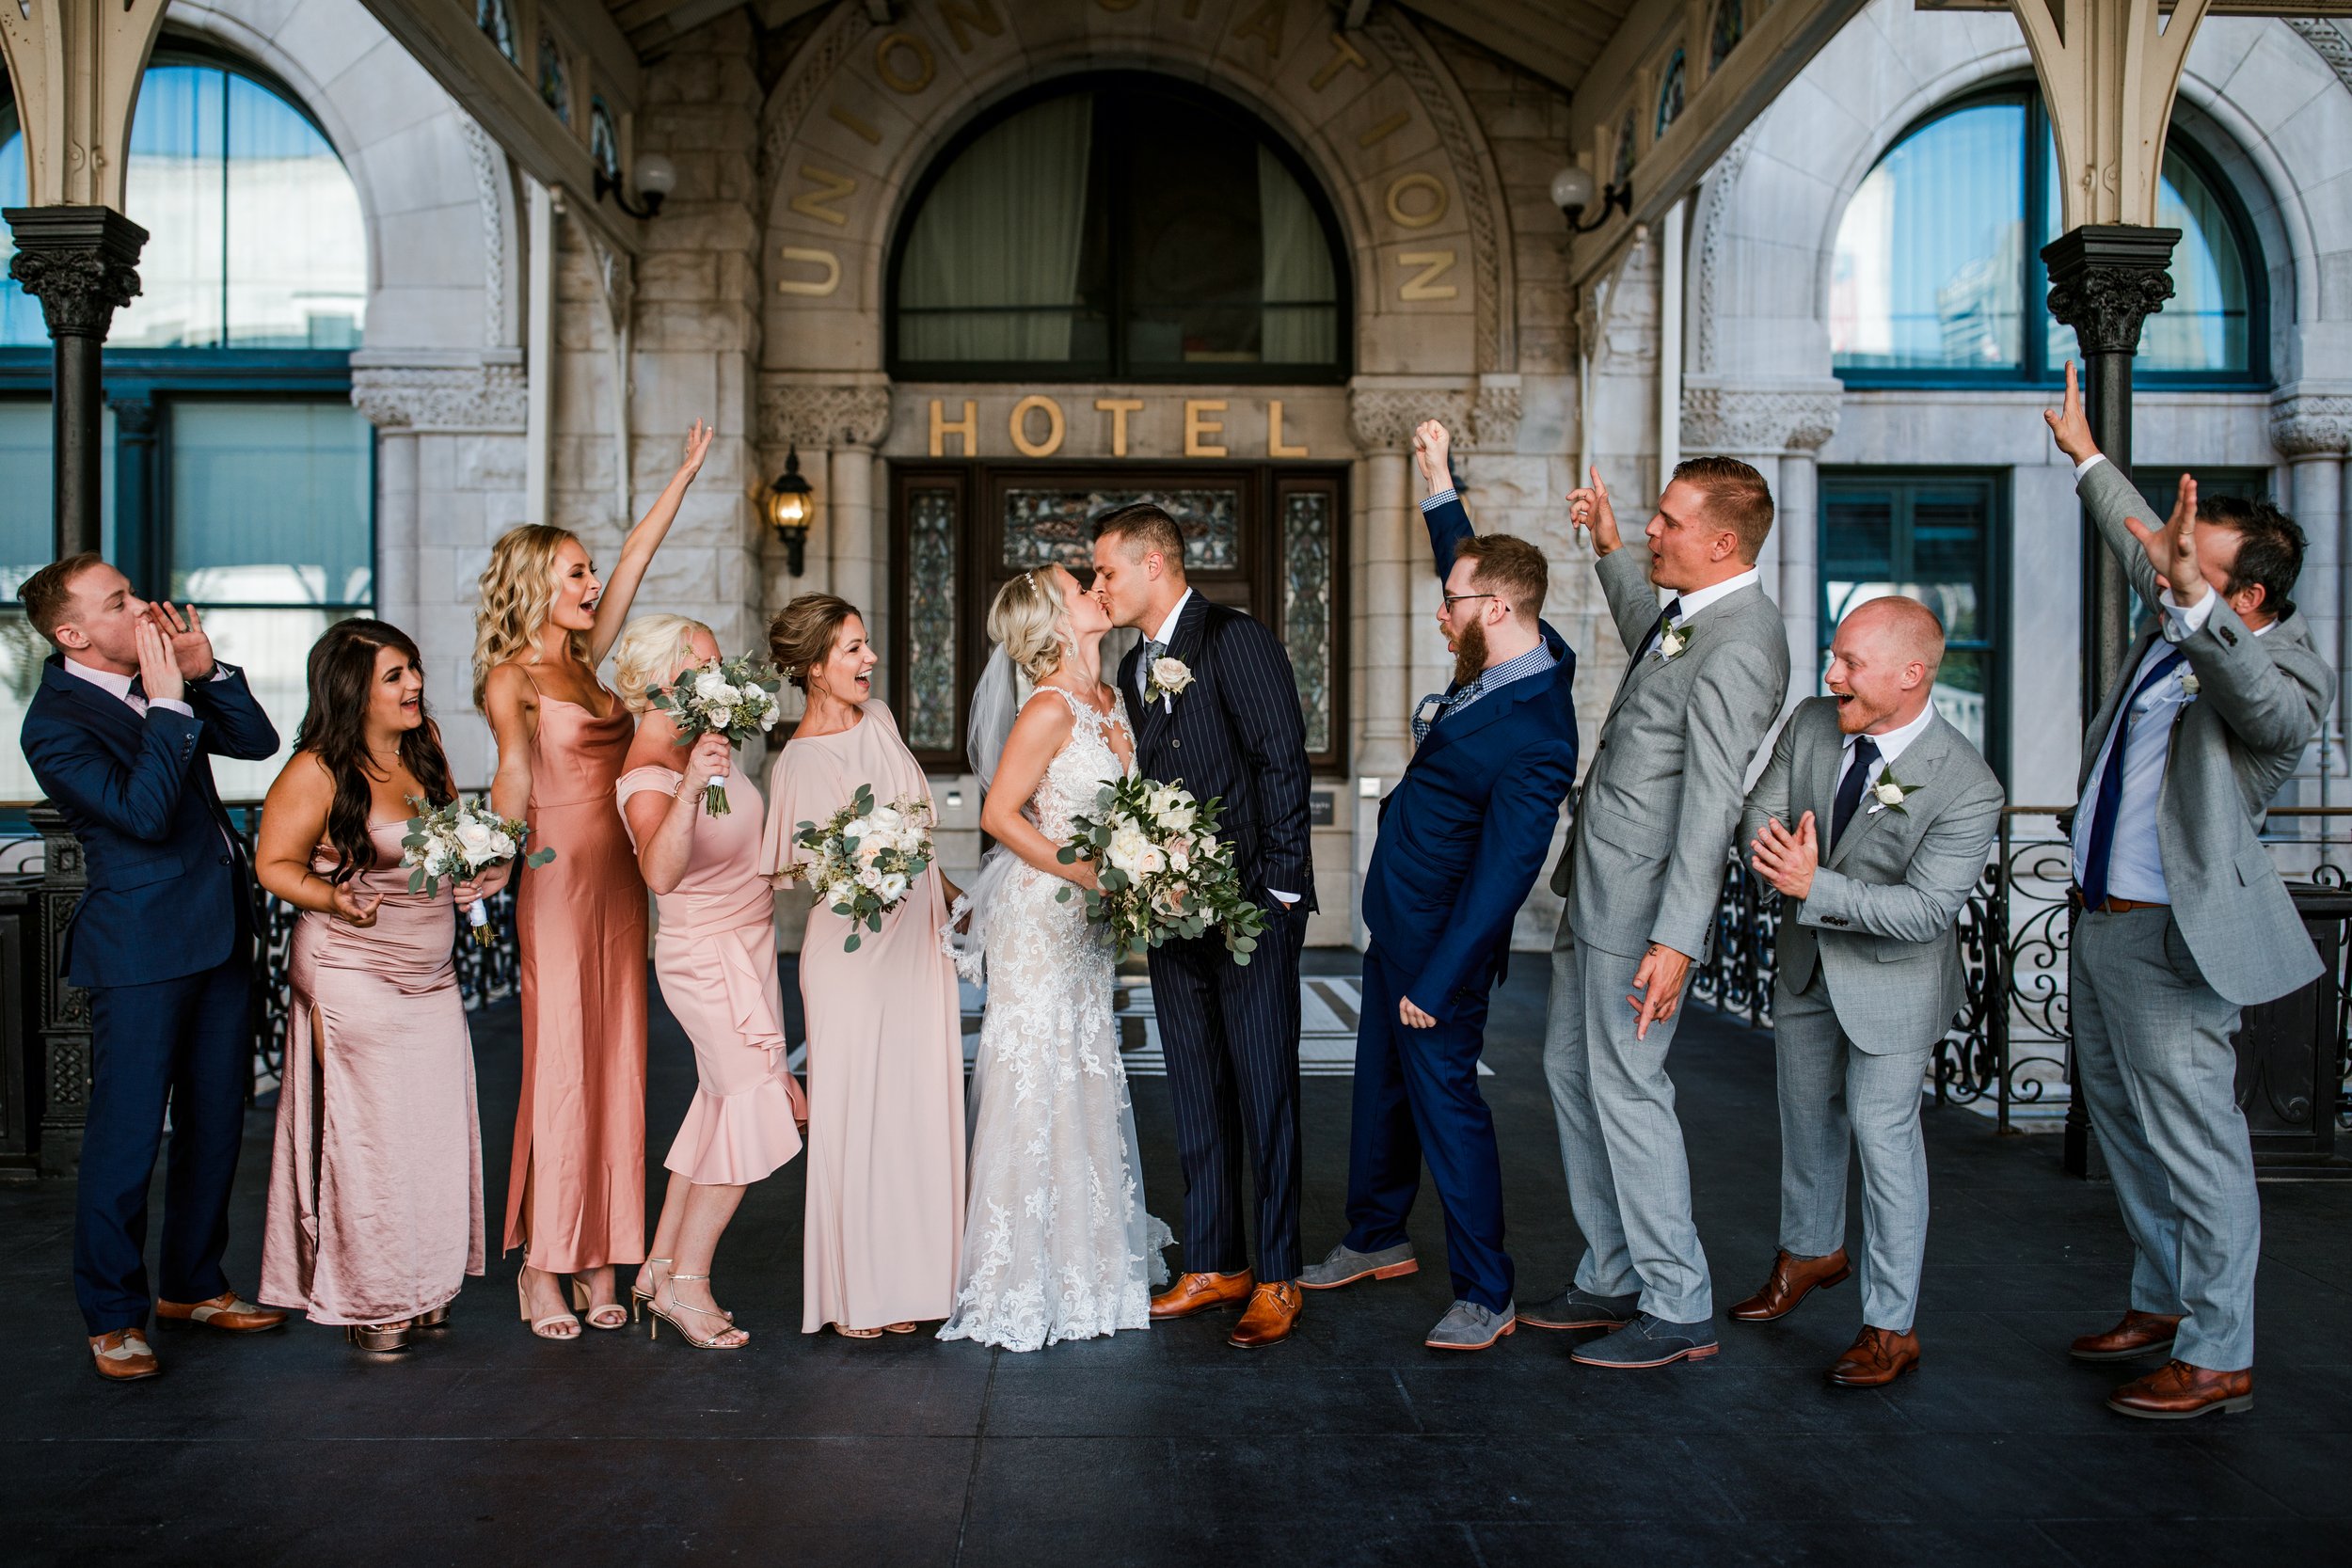 Union Station Hotel Wedding | Nashville, TN